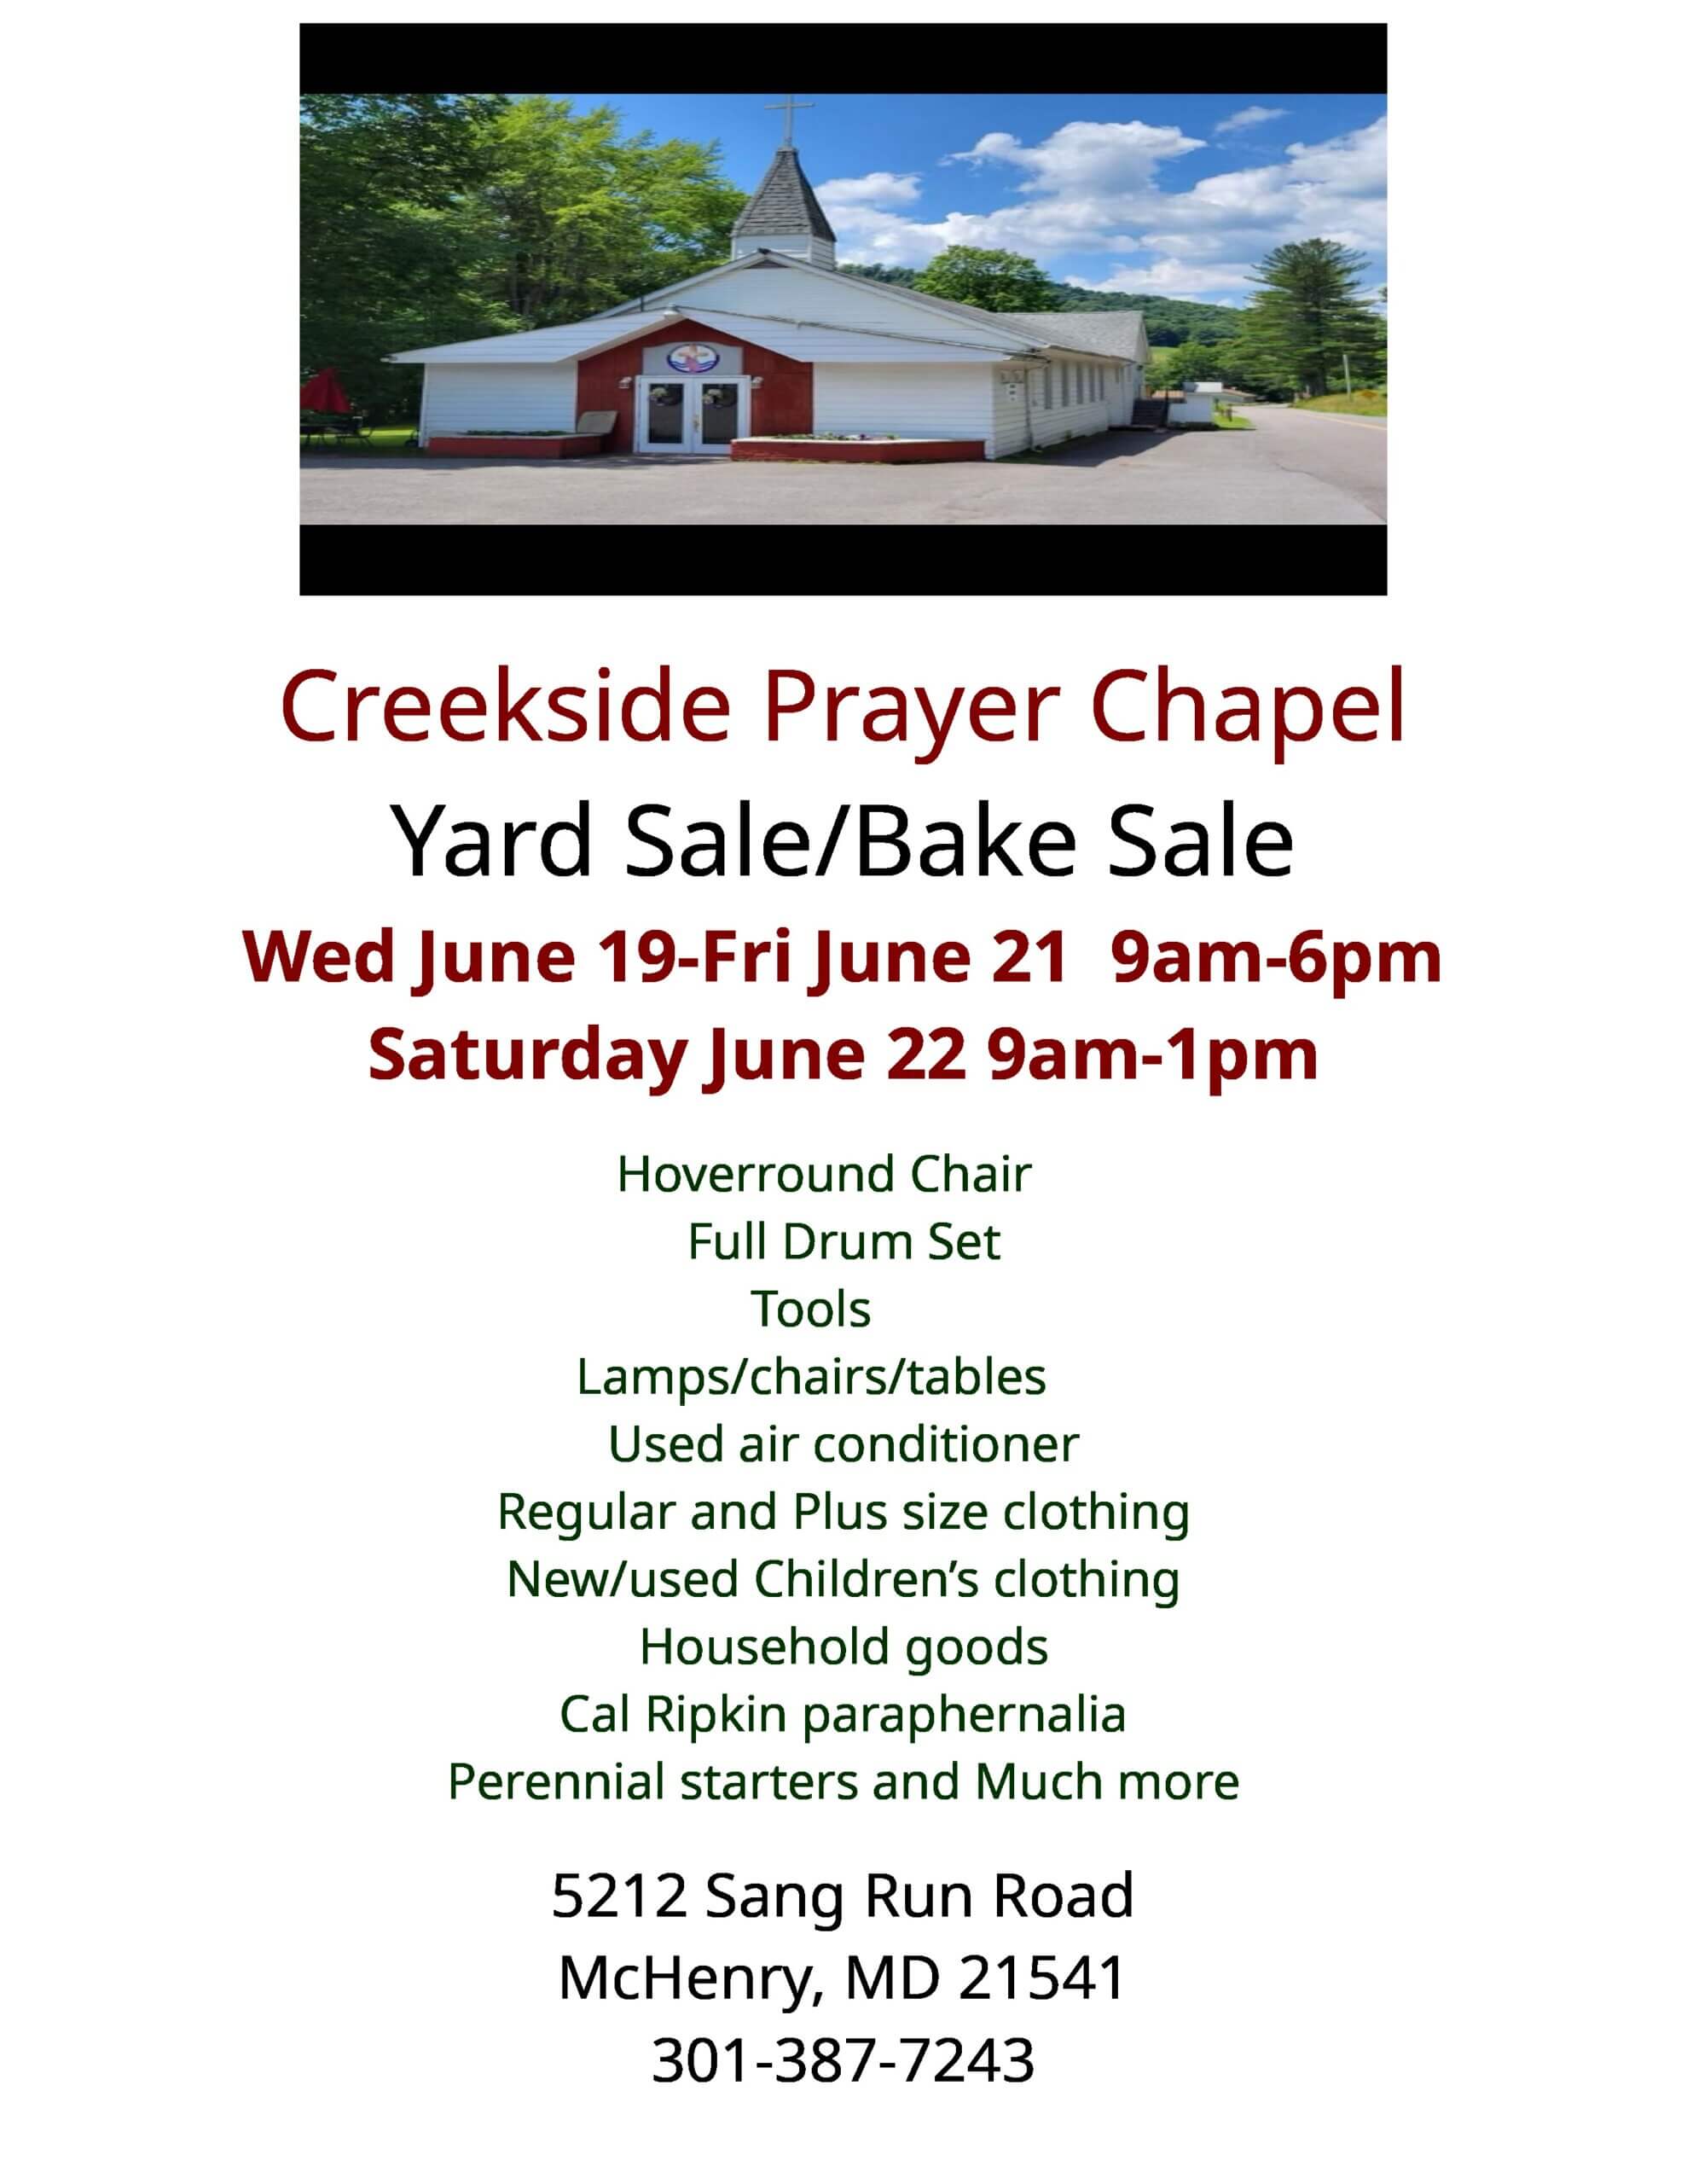 Creekside Prayer Chapel Yard Sale/Bake Sale at Deep Creek Lake, MD